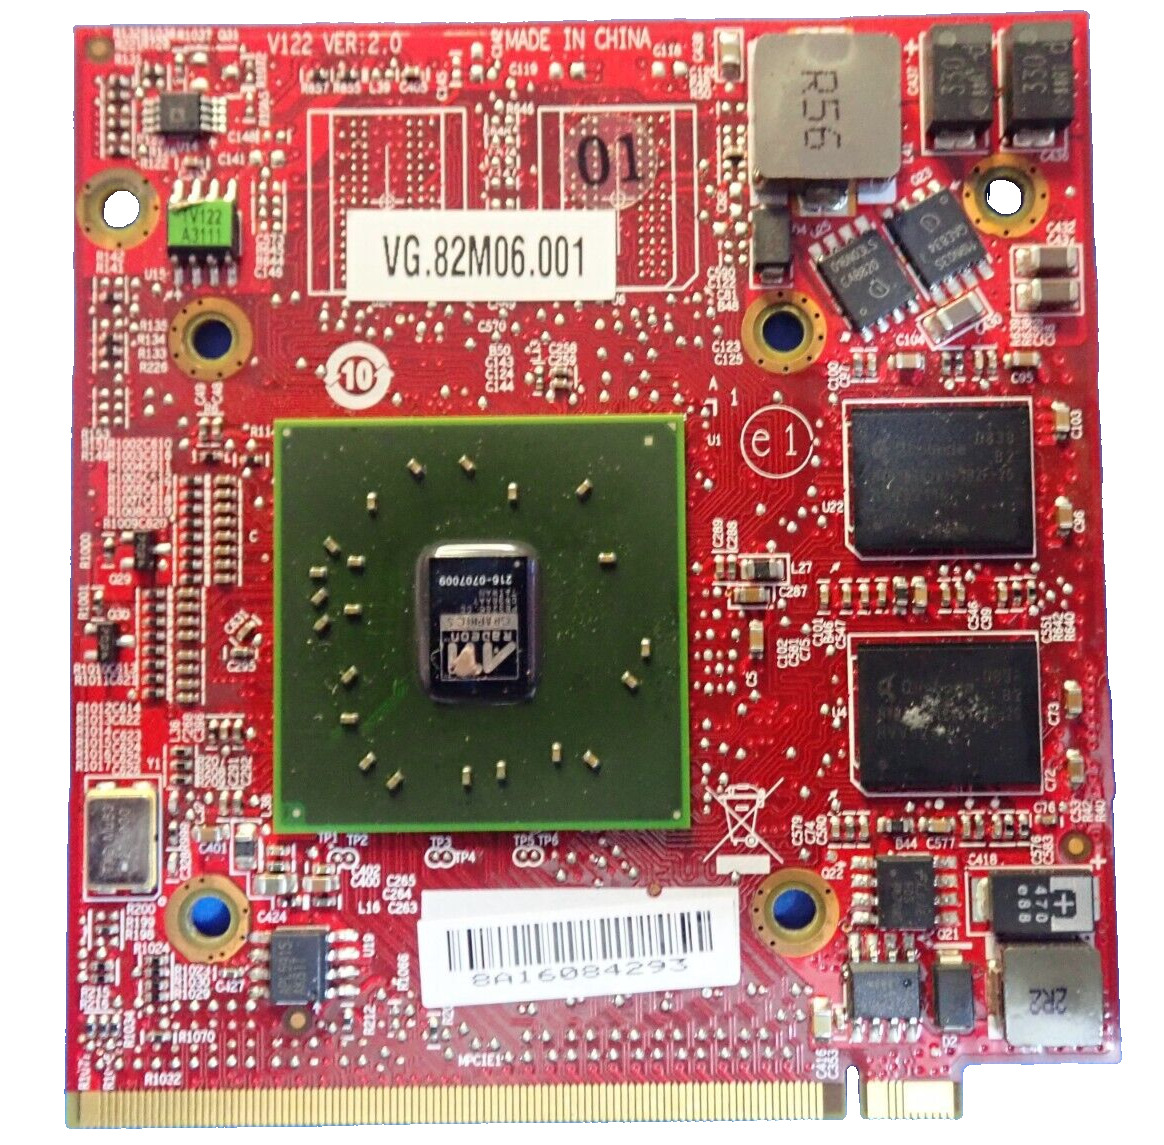 Acer Aspire 5920g AMD Radeon HD 3470 Graphics Card VG.82M06.001